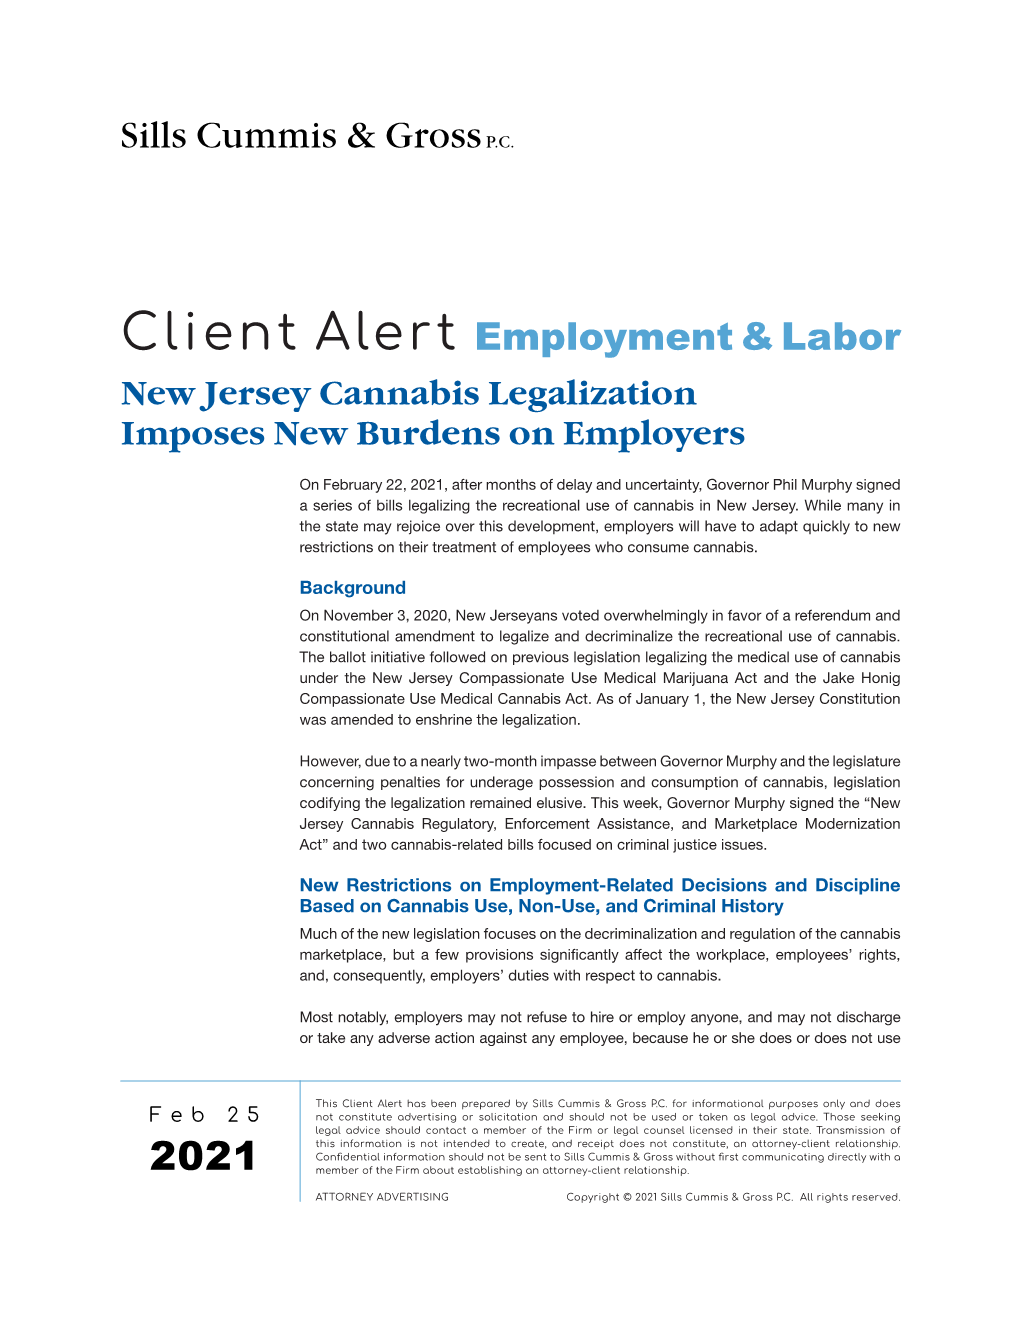 Client Alert Employment & Labor